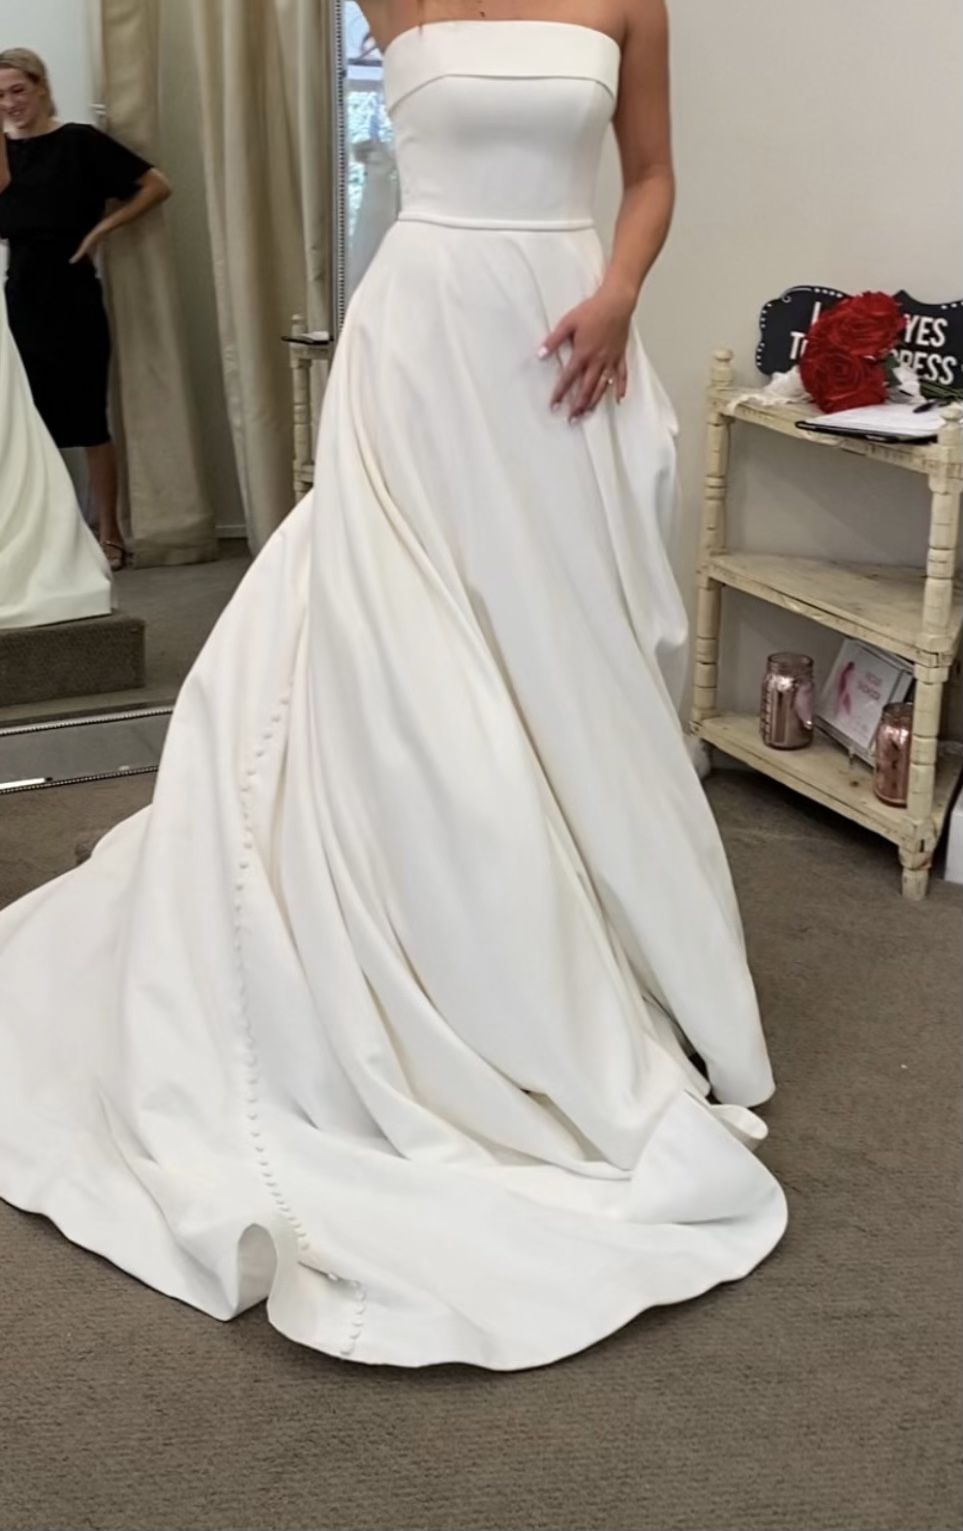 [NEW] Stella York 7045 Wedding Dress